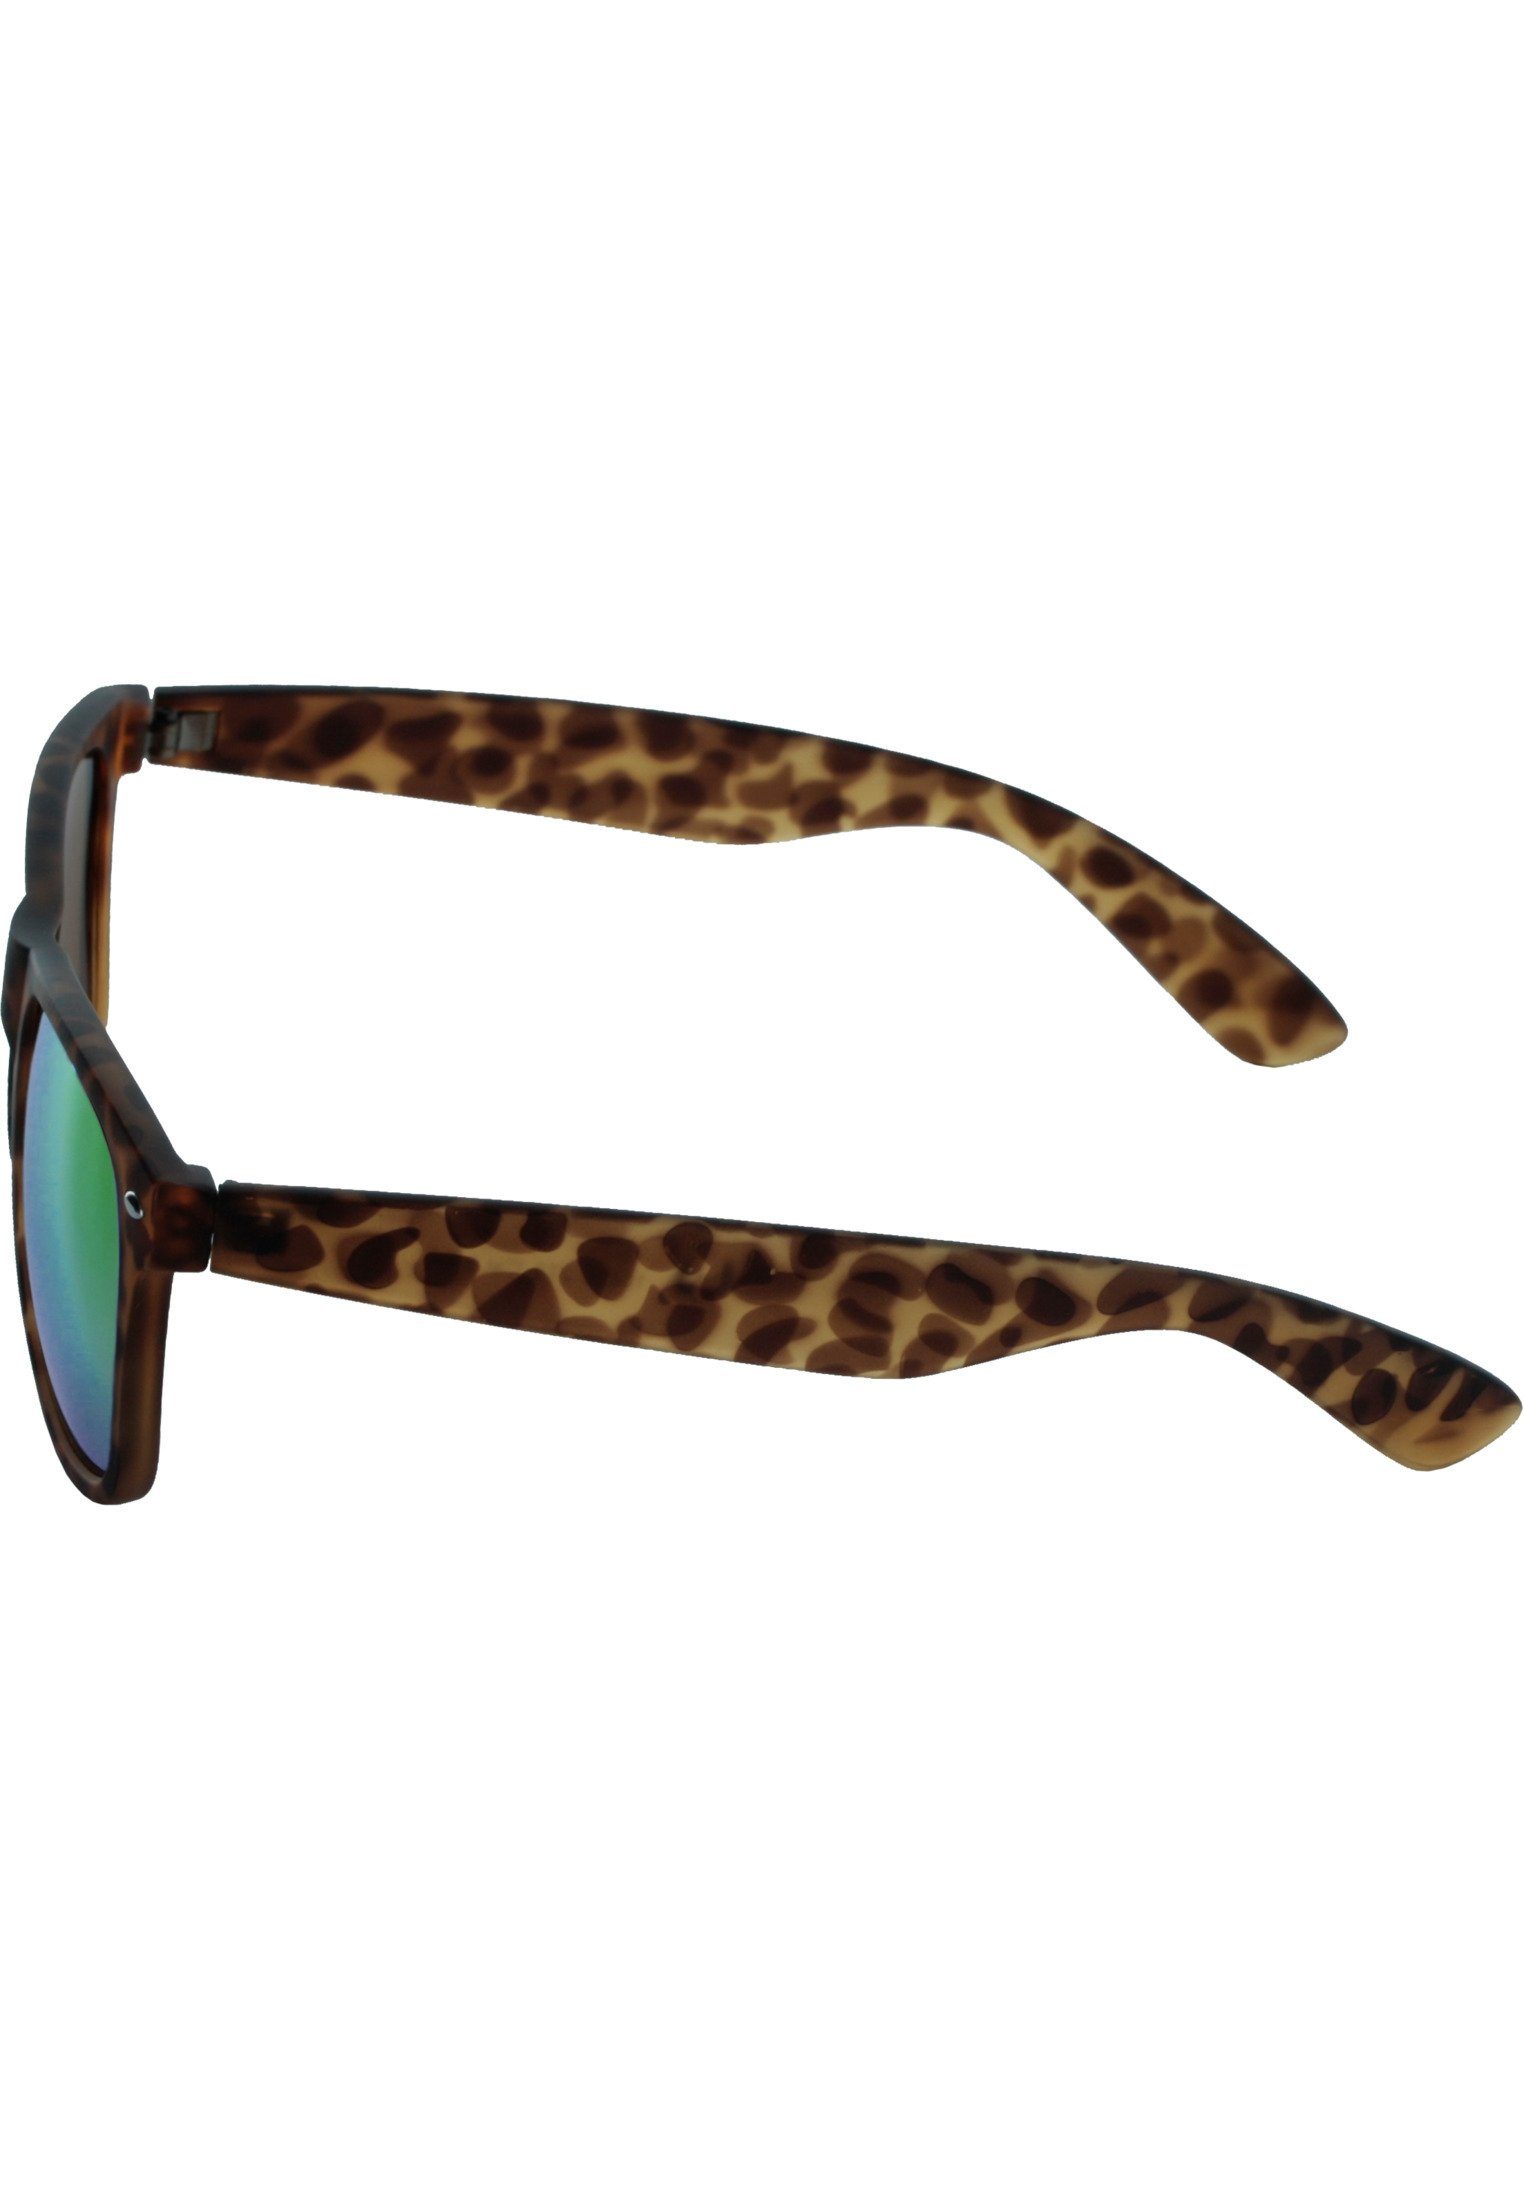 Sunglasses Sonnenbrille Likoma MSTRDS amber/blue Accessoires Mirror